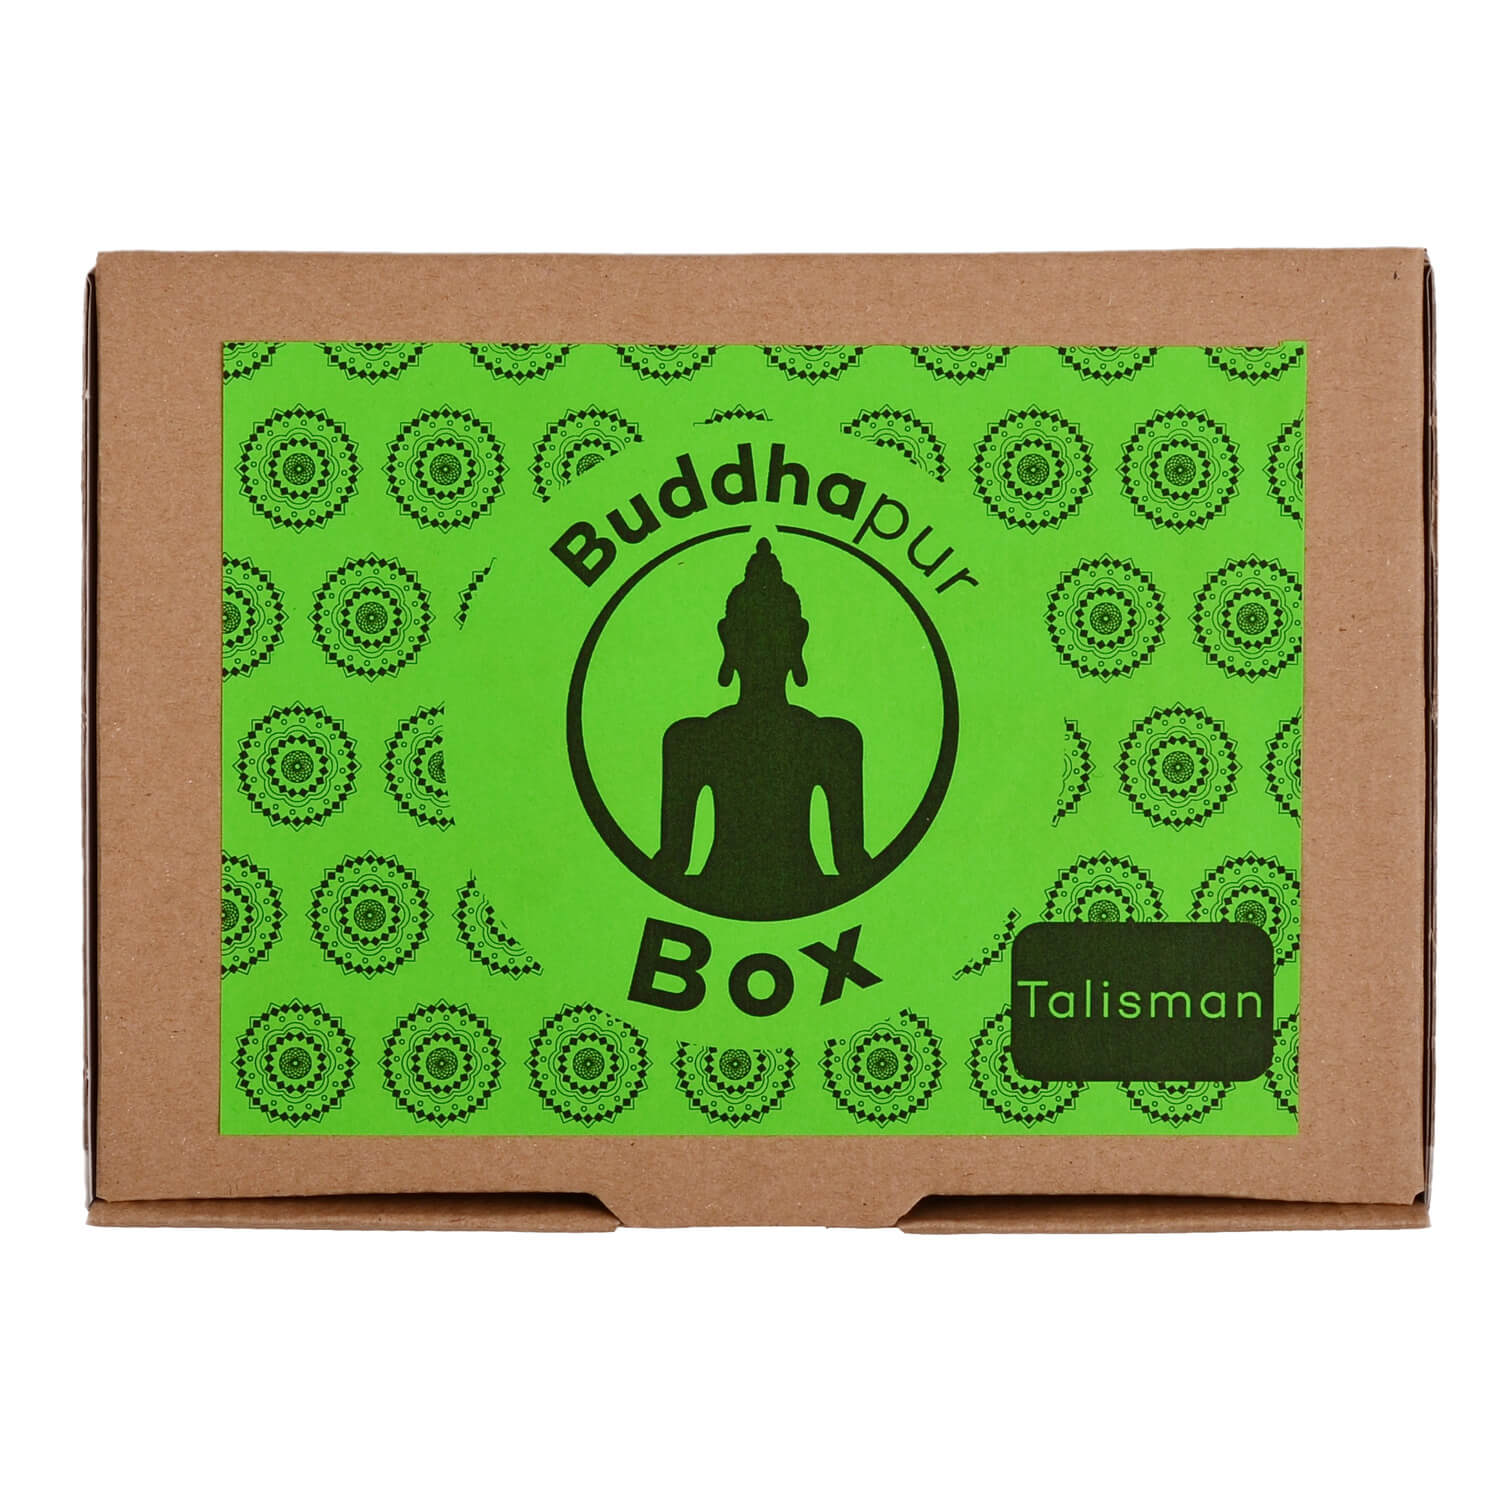 Buddhapur Box Talisman: Verpackung